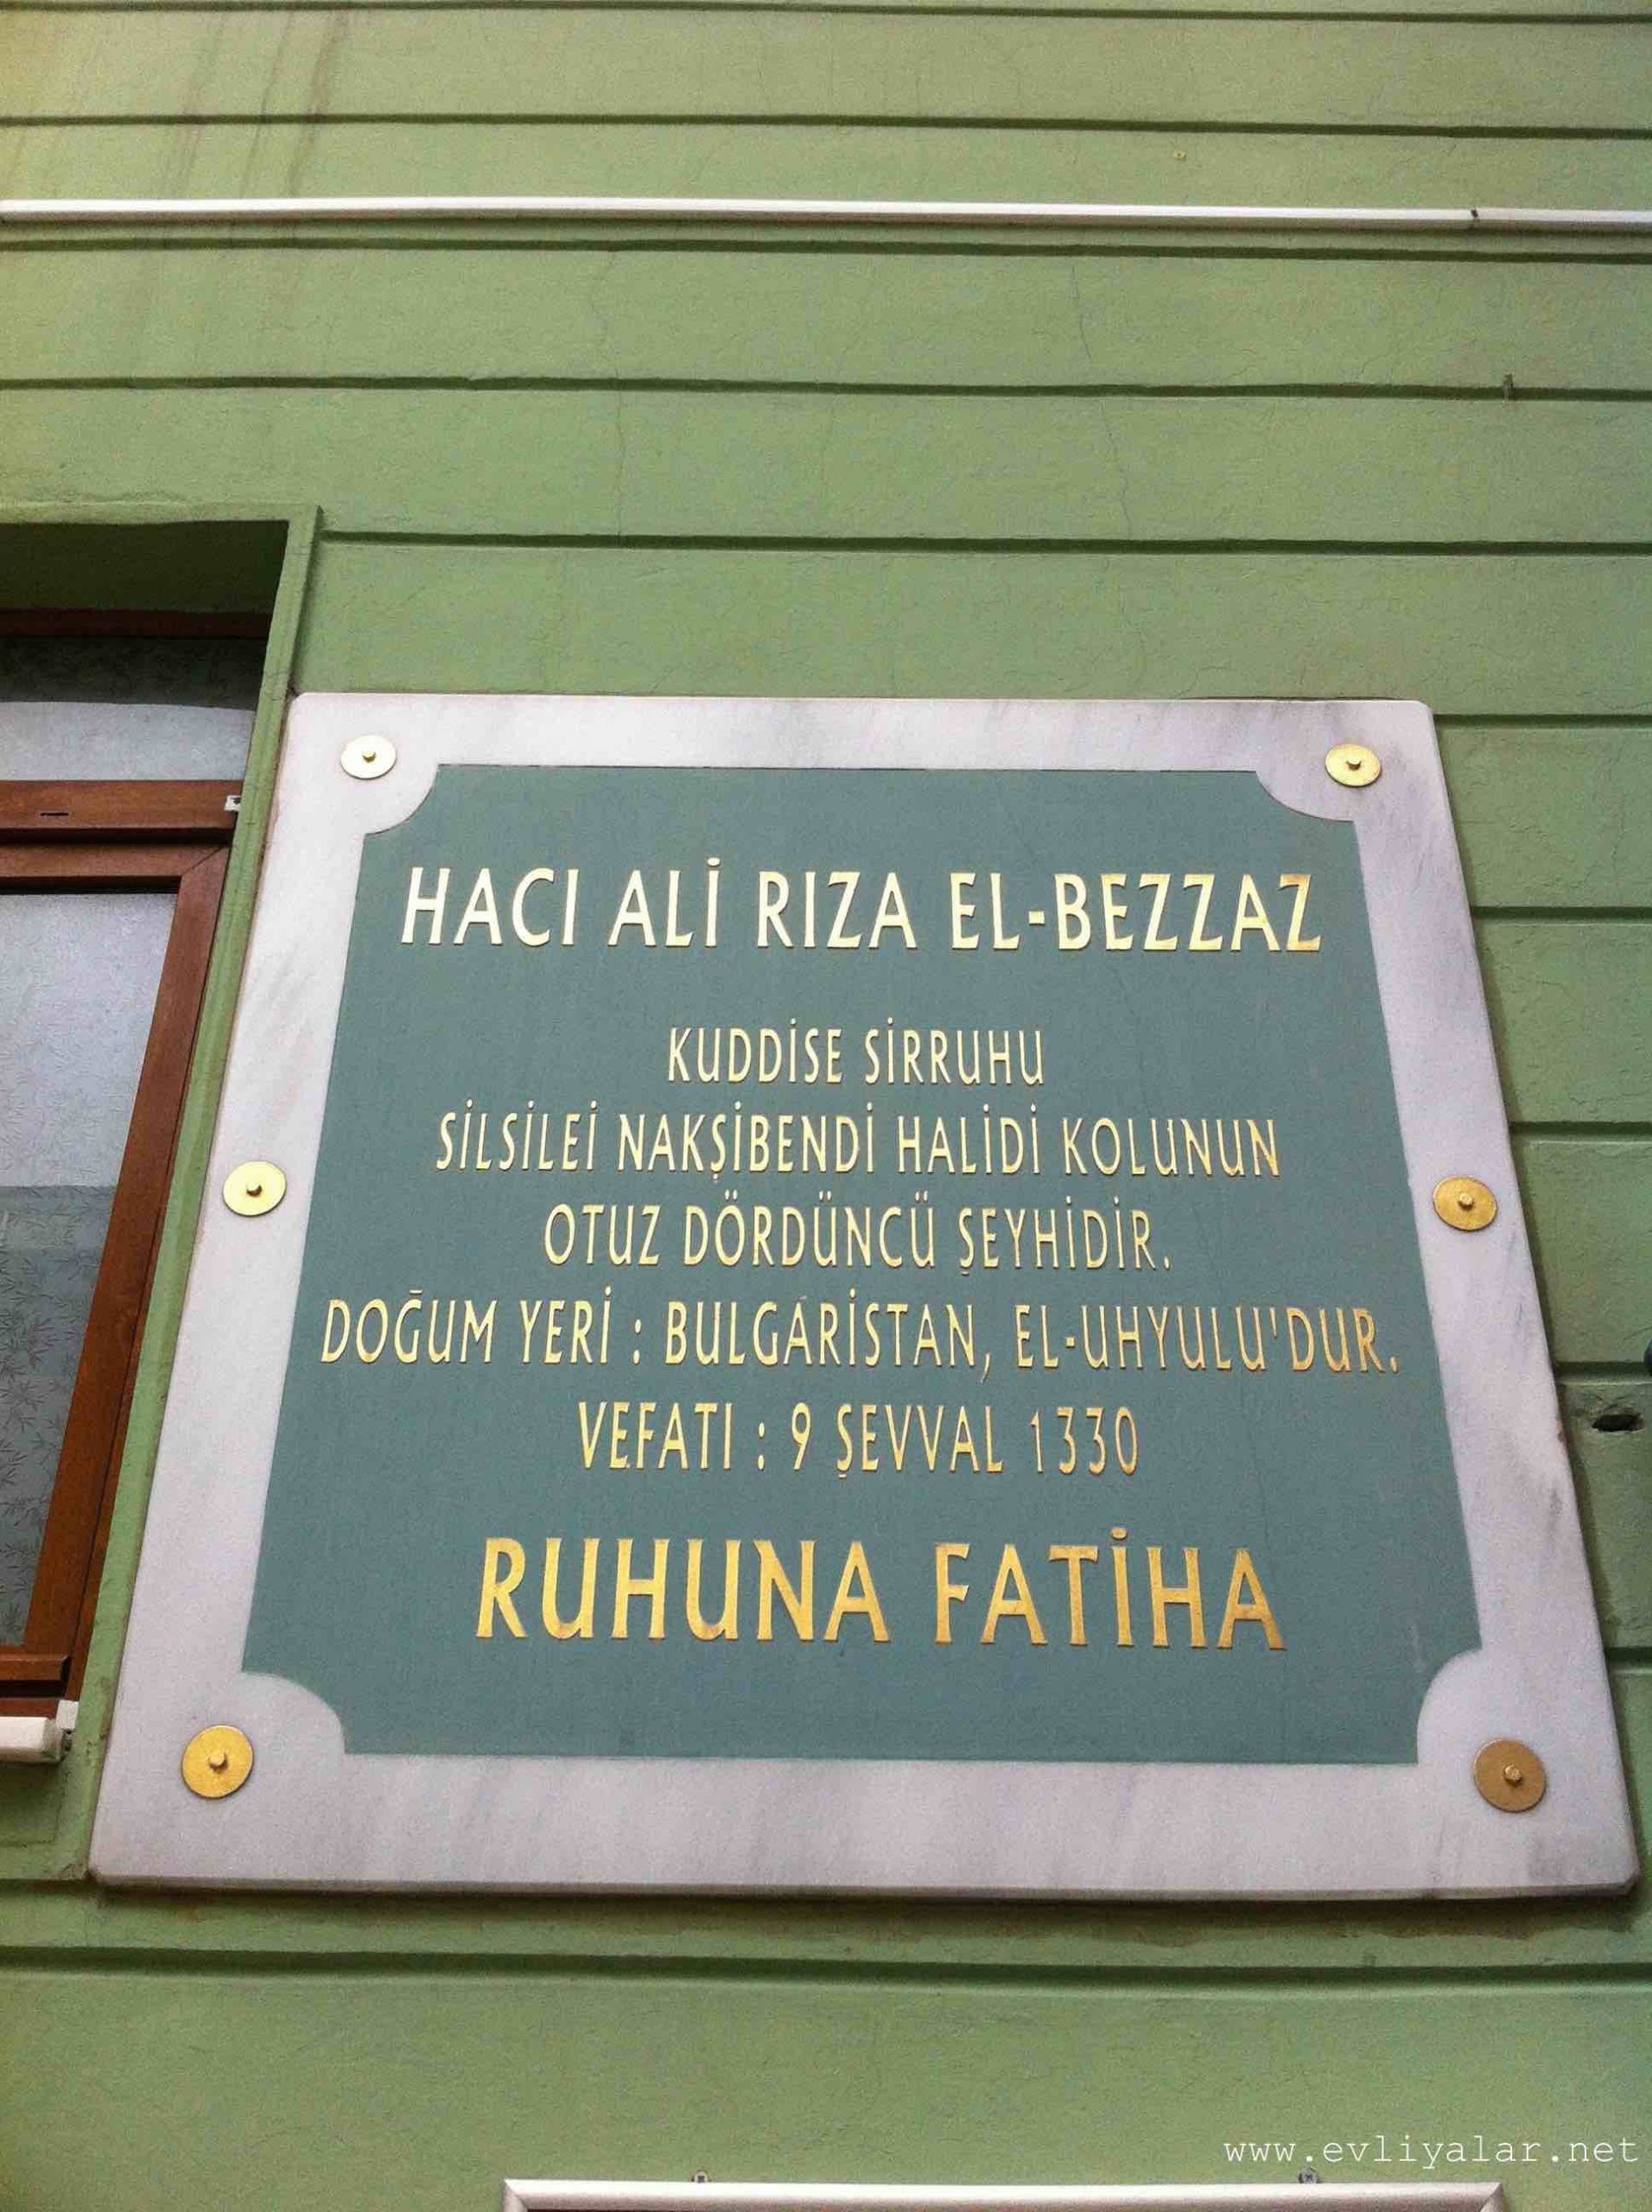 Ali Rıza Bezzaz (k.s.)